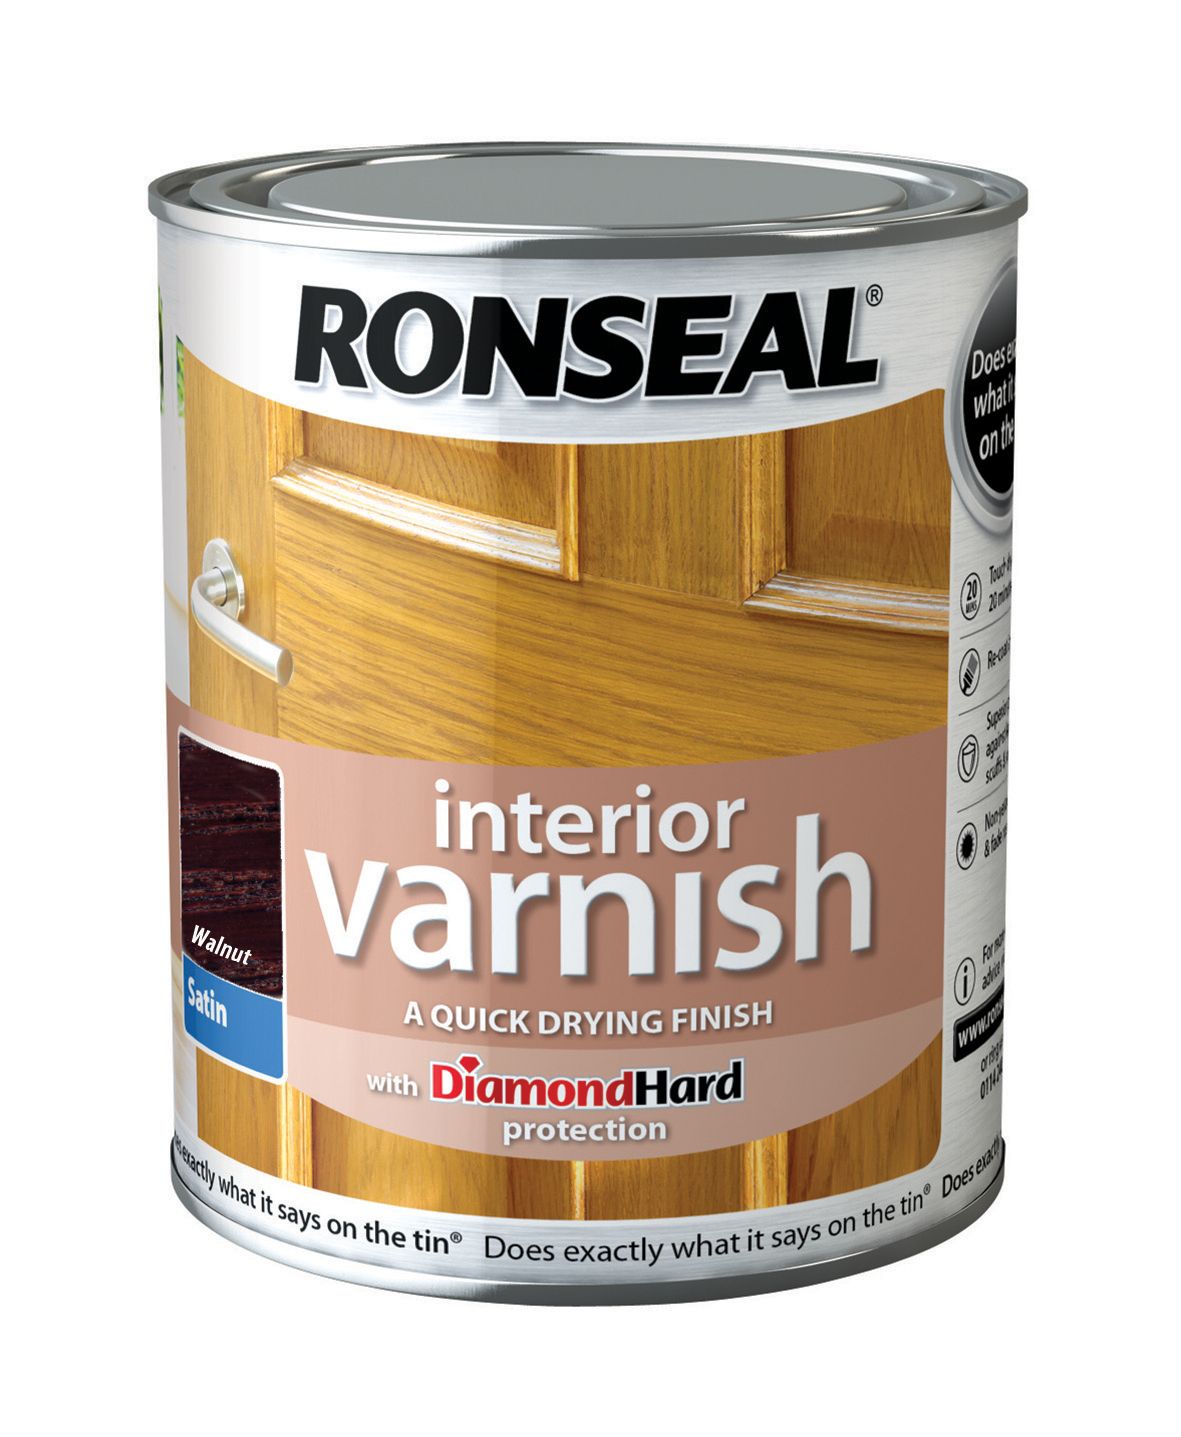 Ronseal Interior Varnish - Satin Walnut 750ml